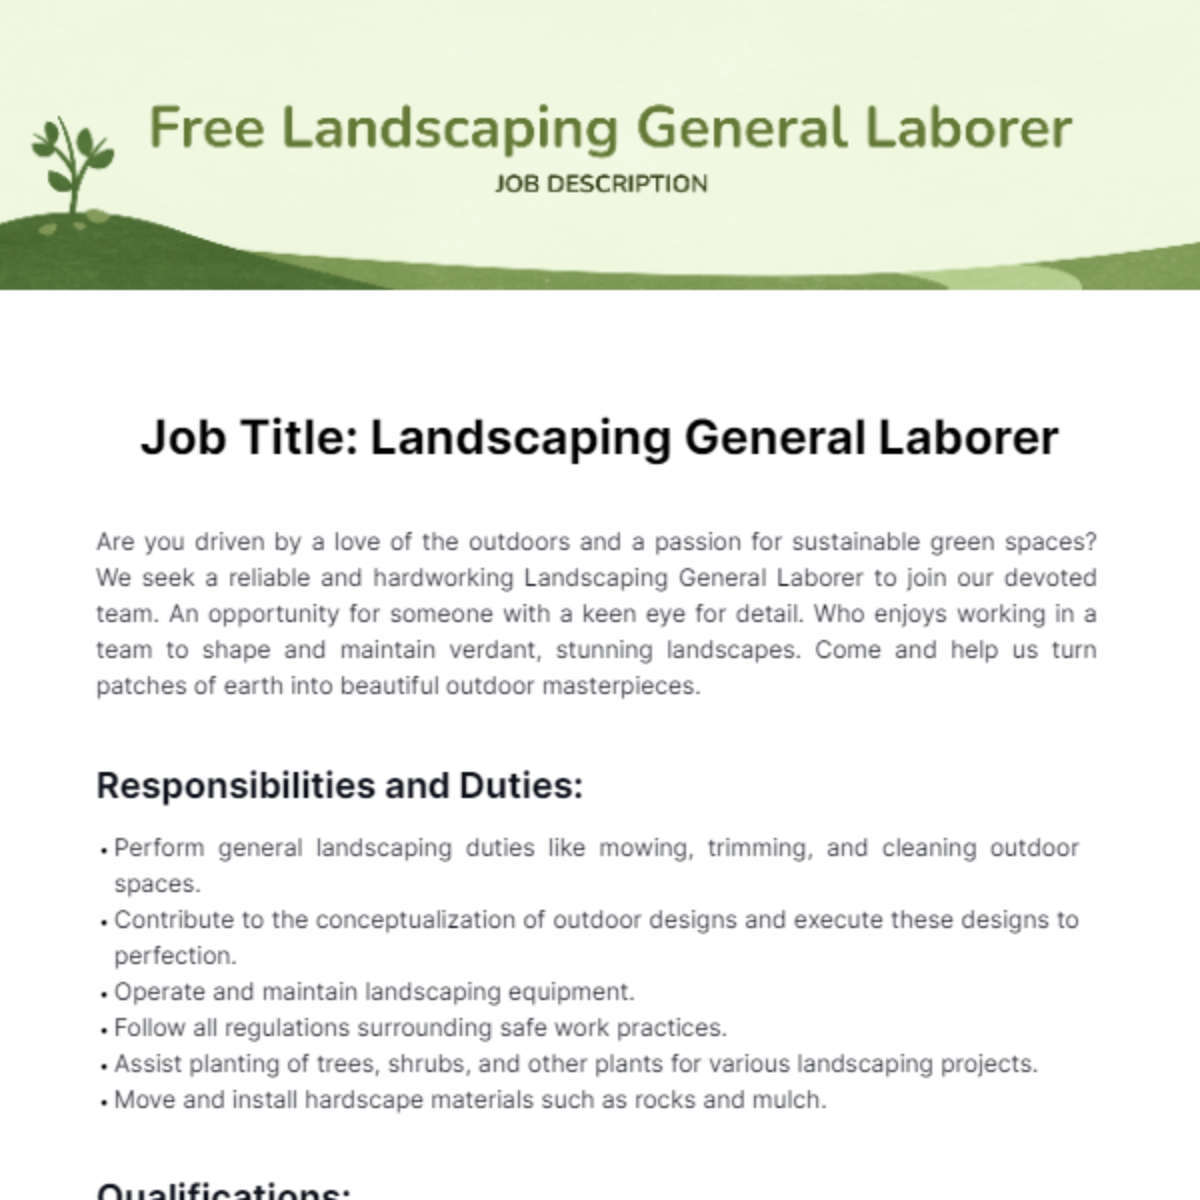 Free Landscaping General Laborer Job Description Template